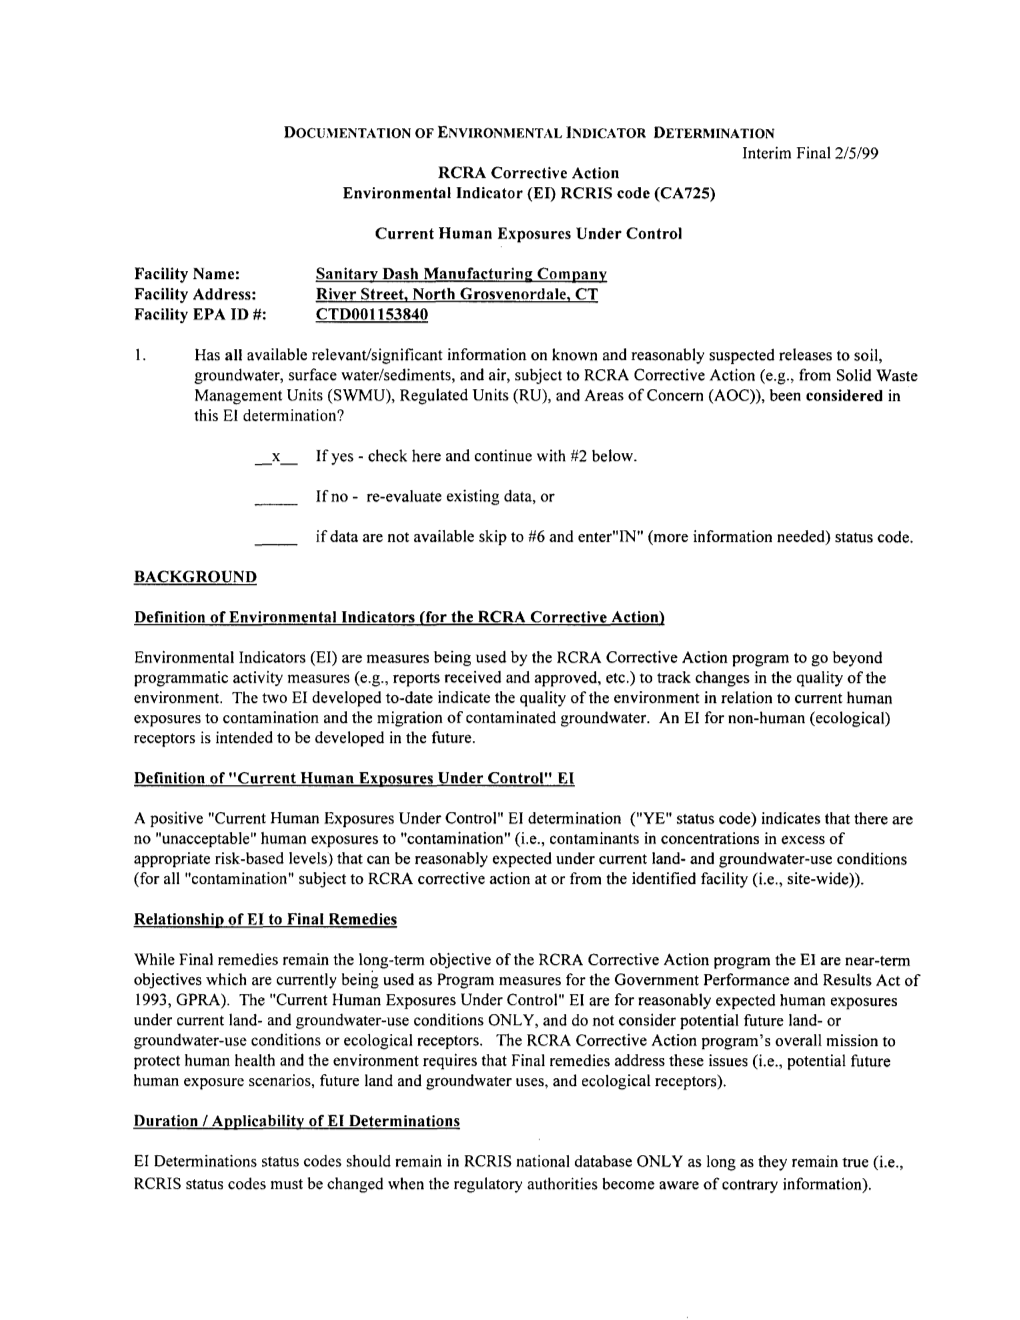 ENVIRONMENTAL INDICATOR DETERMINATION Interim Final 2/5/99 RCRA Corrective Action Environmental Indicator (El) RCRIS Code (CA725)